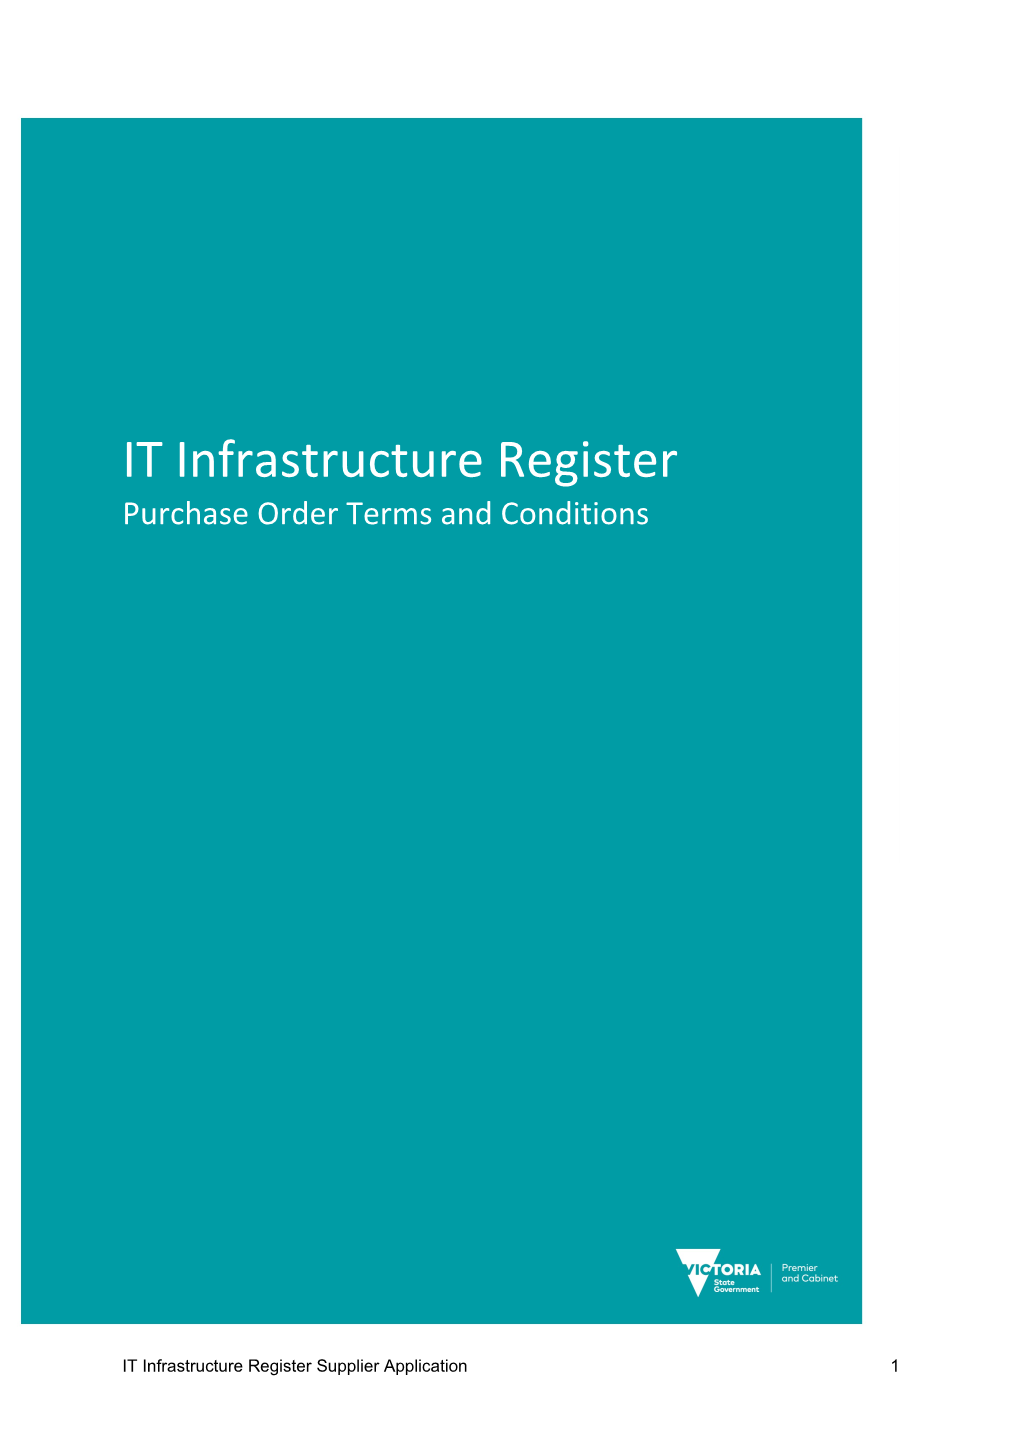 IT Infrastructure Register Supplier Application 1